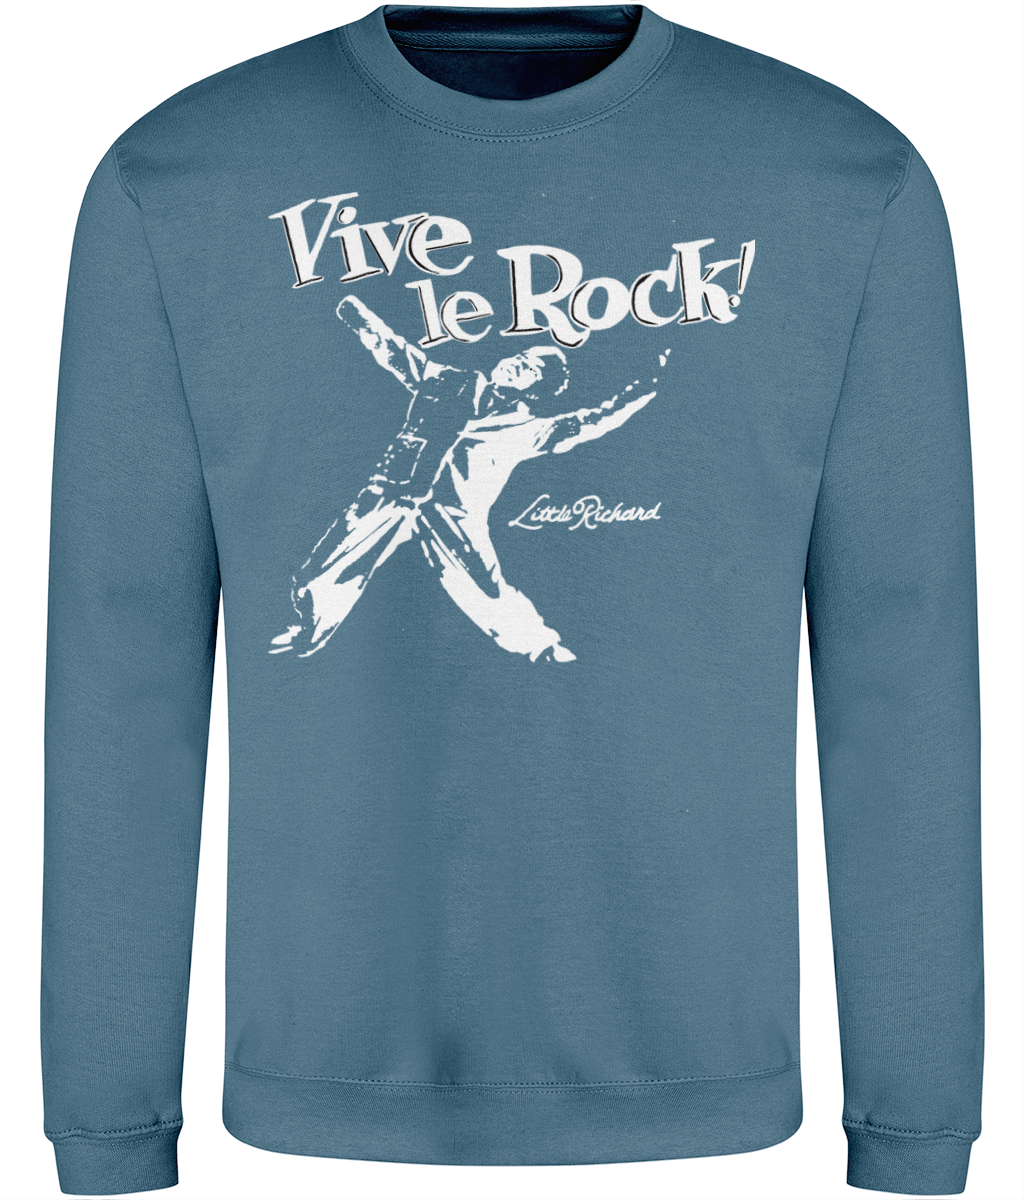 Little Richard-Sweatshirt-1972 GAS T festival-GAS Shir n – Wembley Rock Roll T Shirts